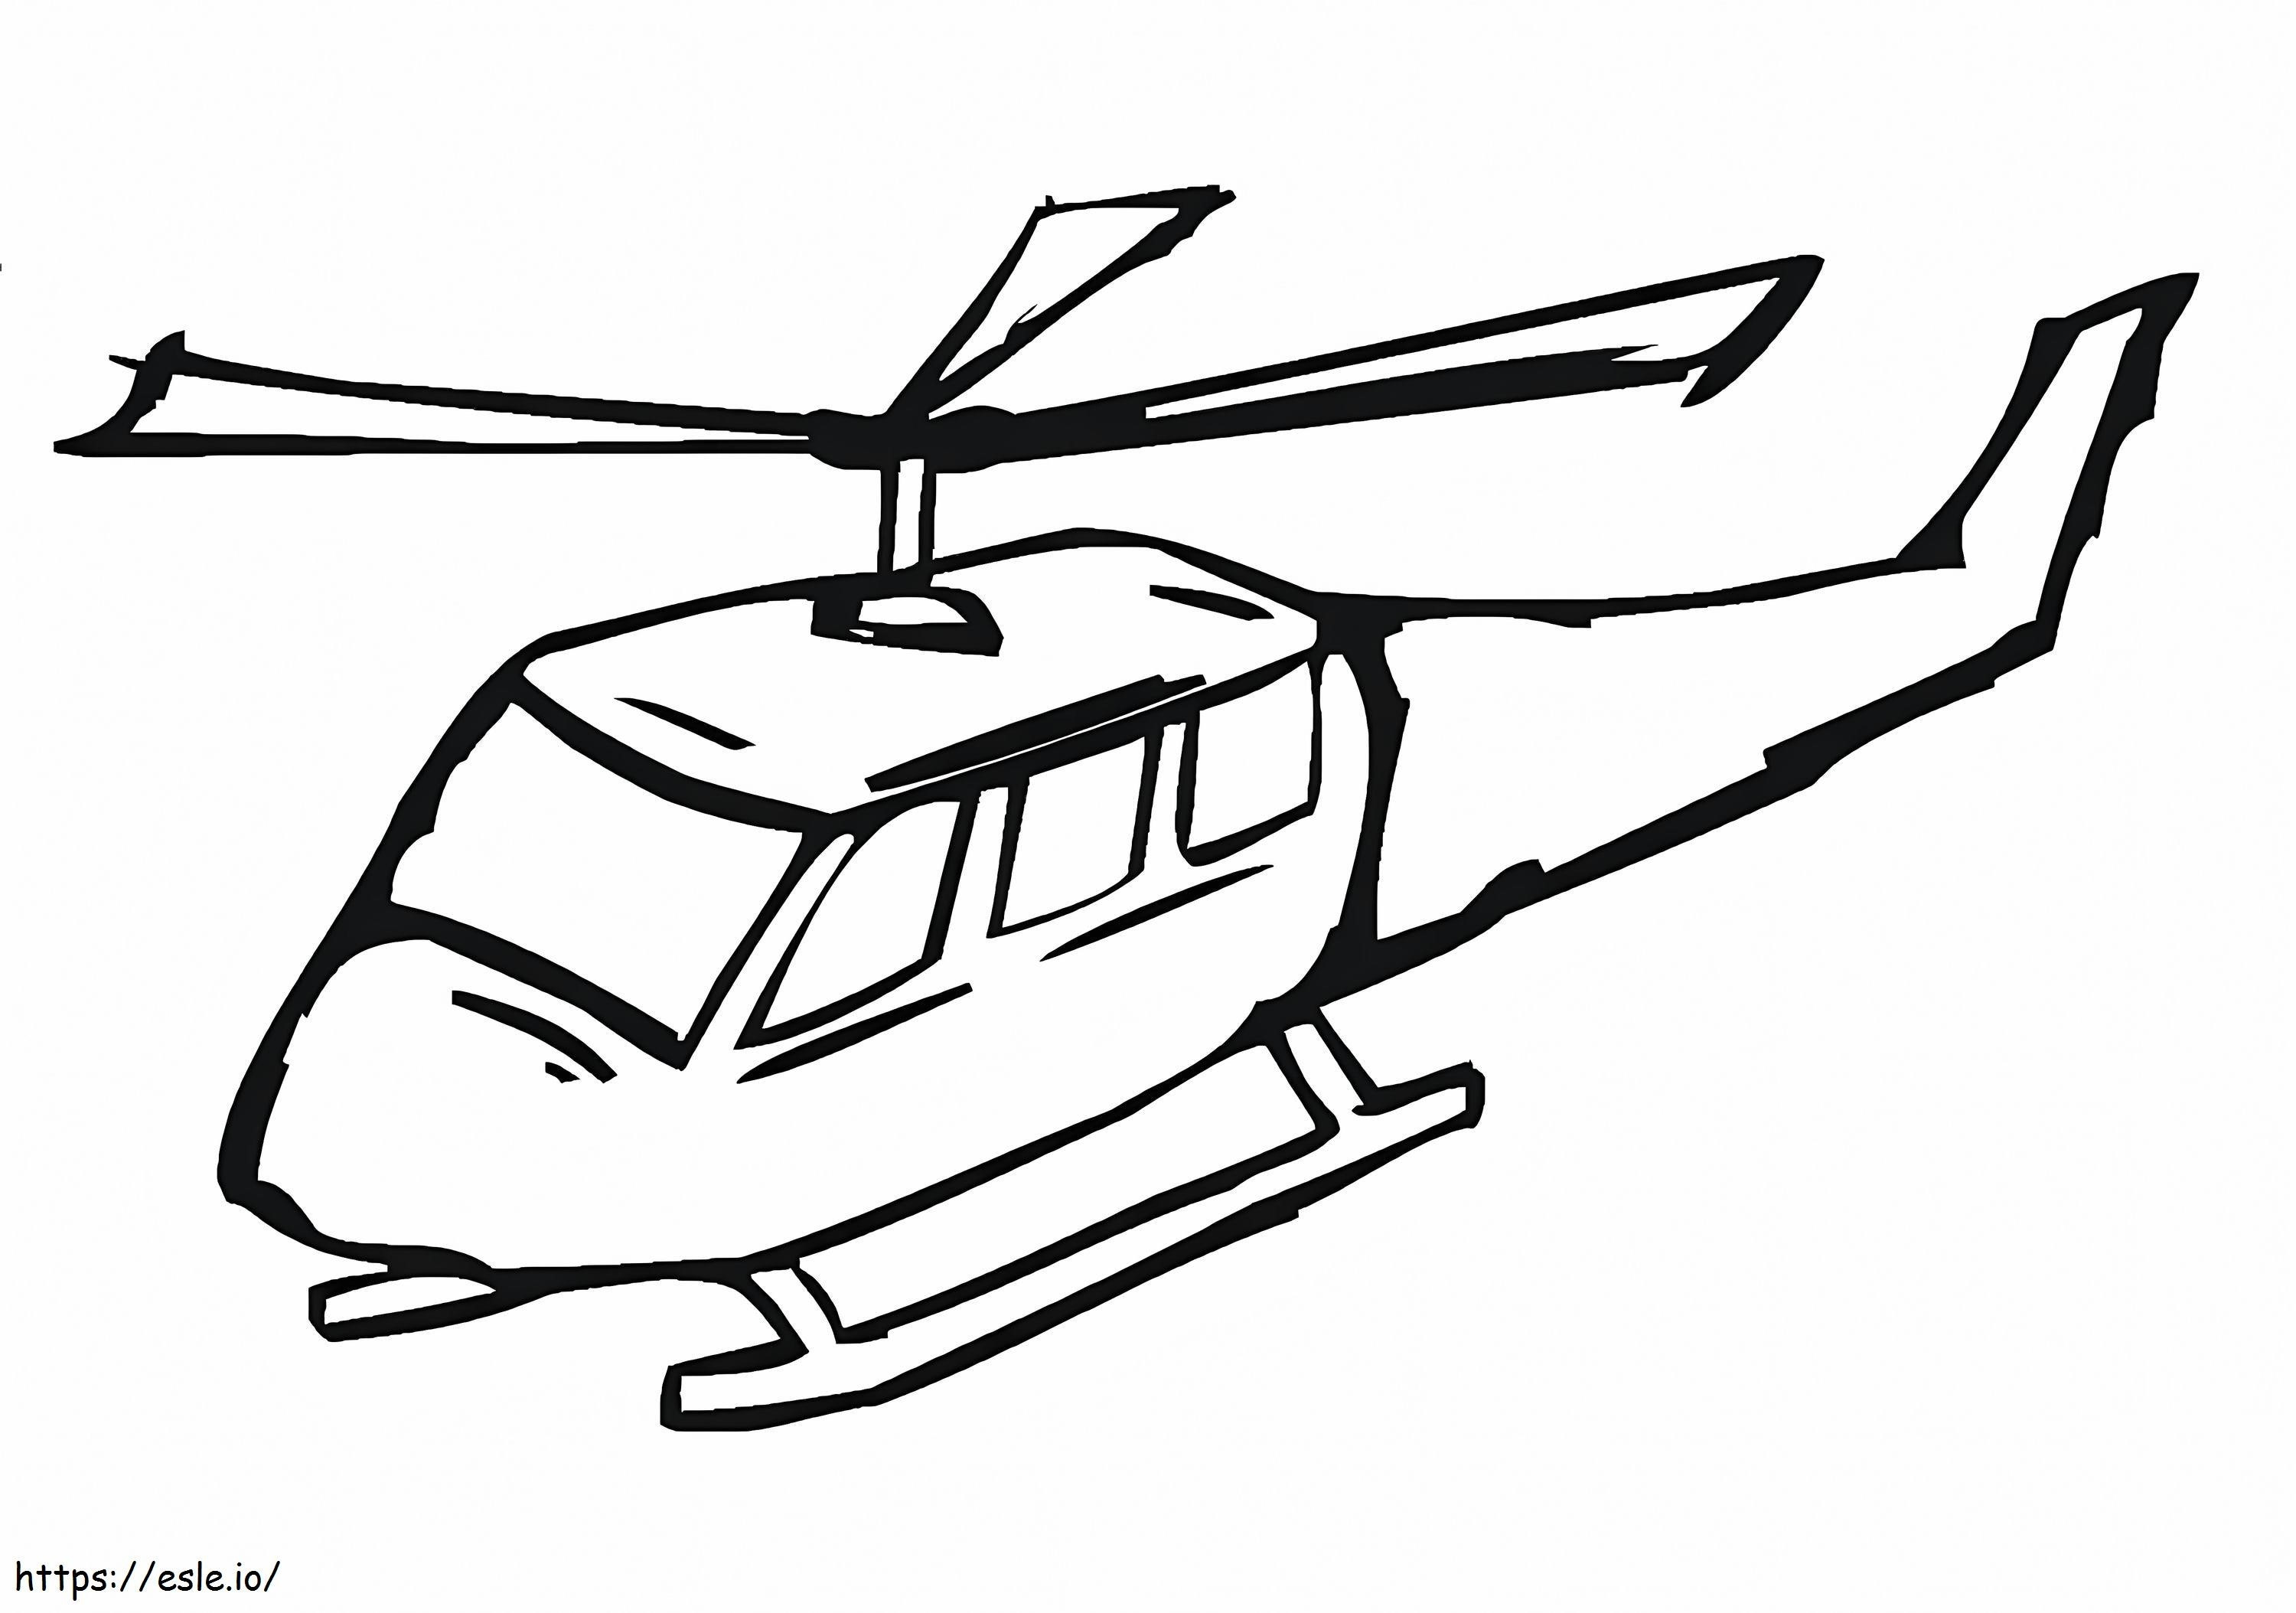 Stary helikopter kolorowanka